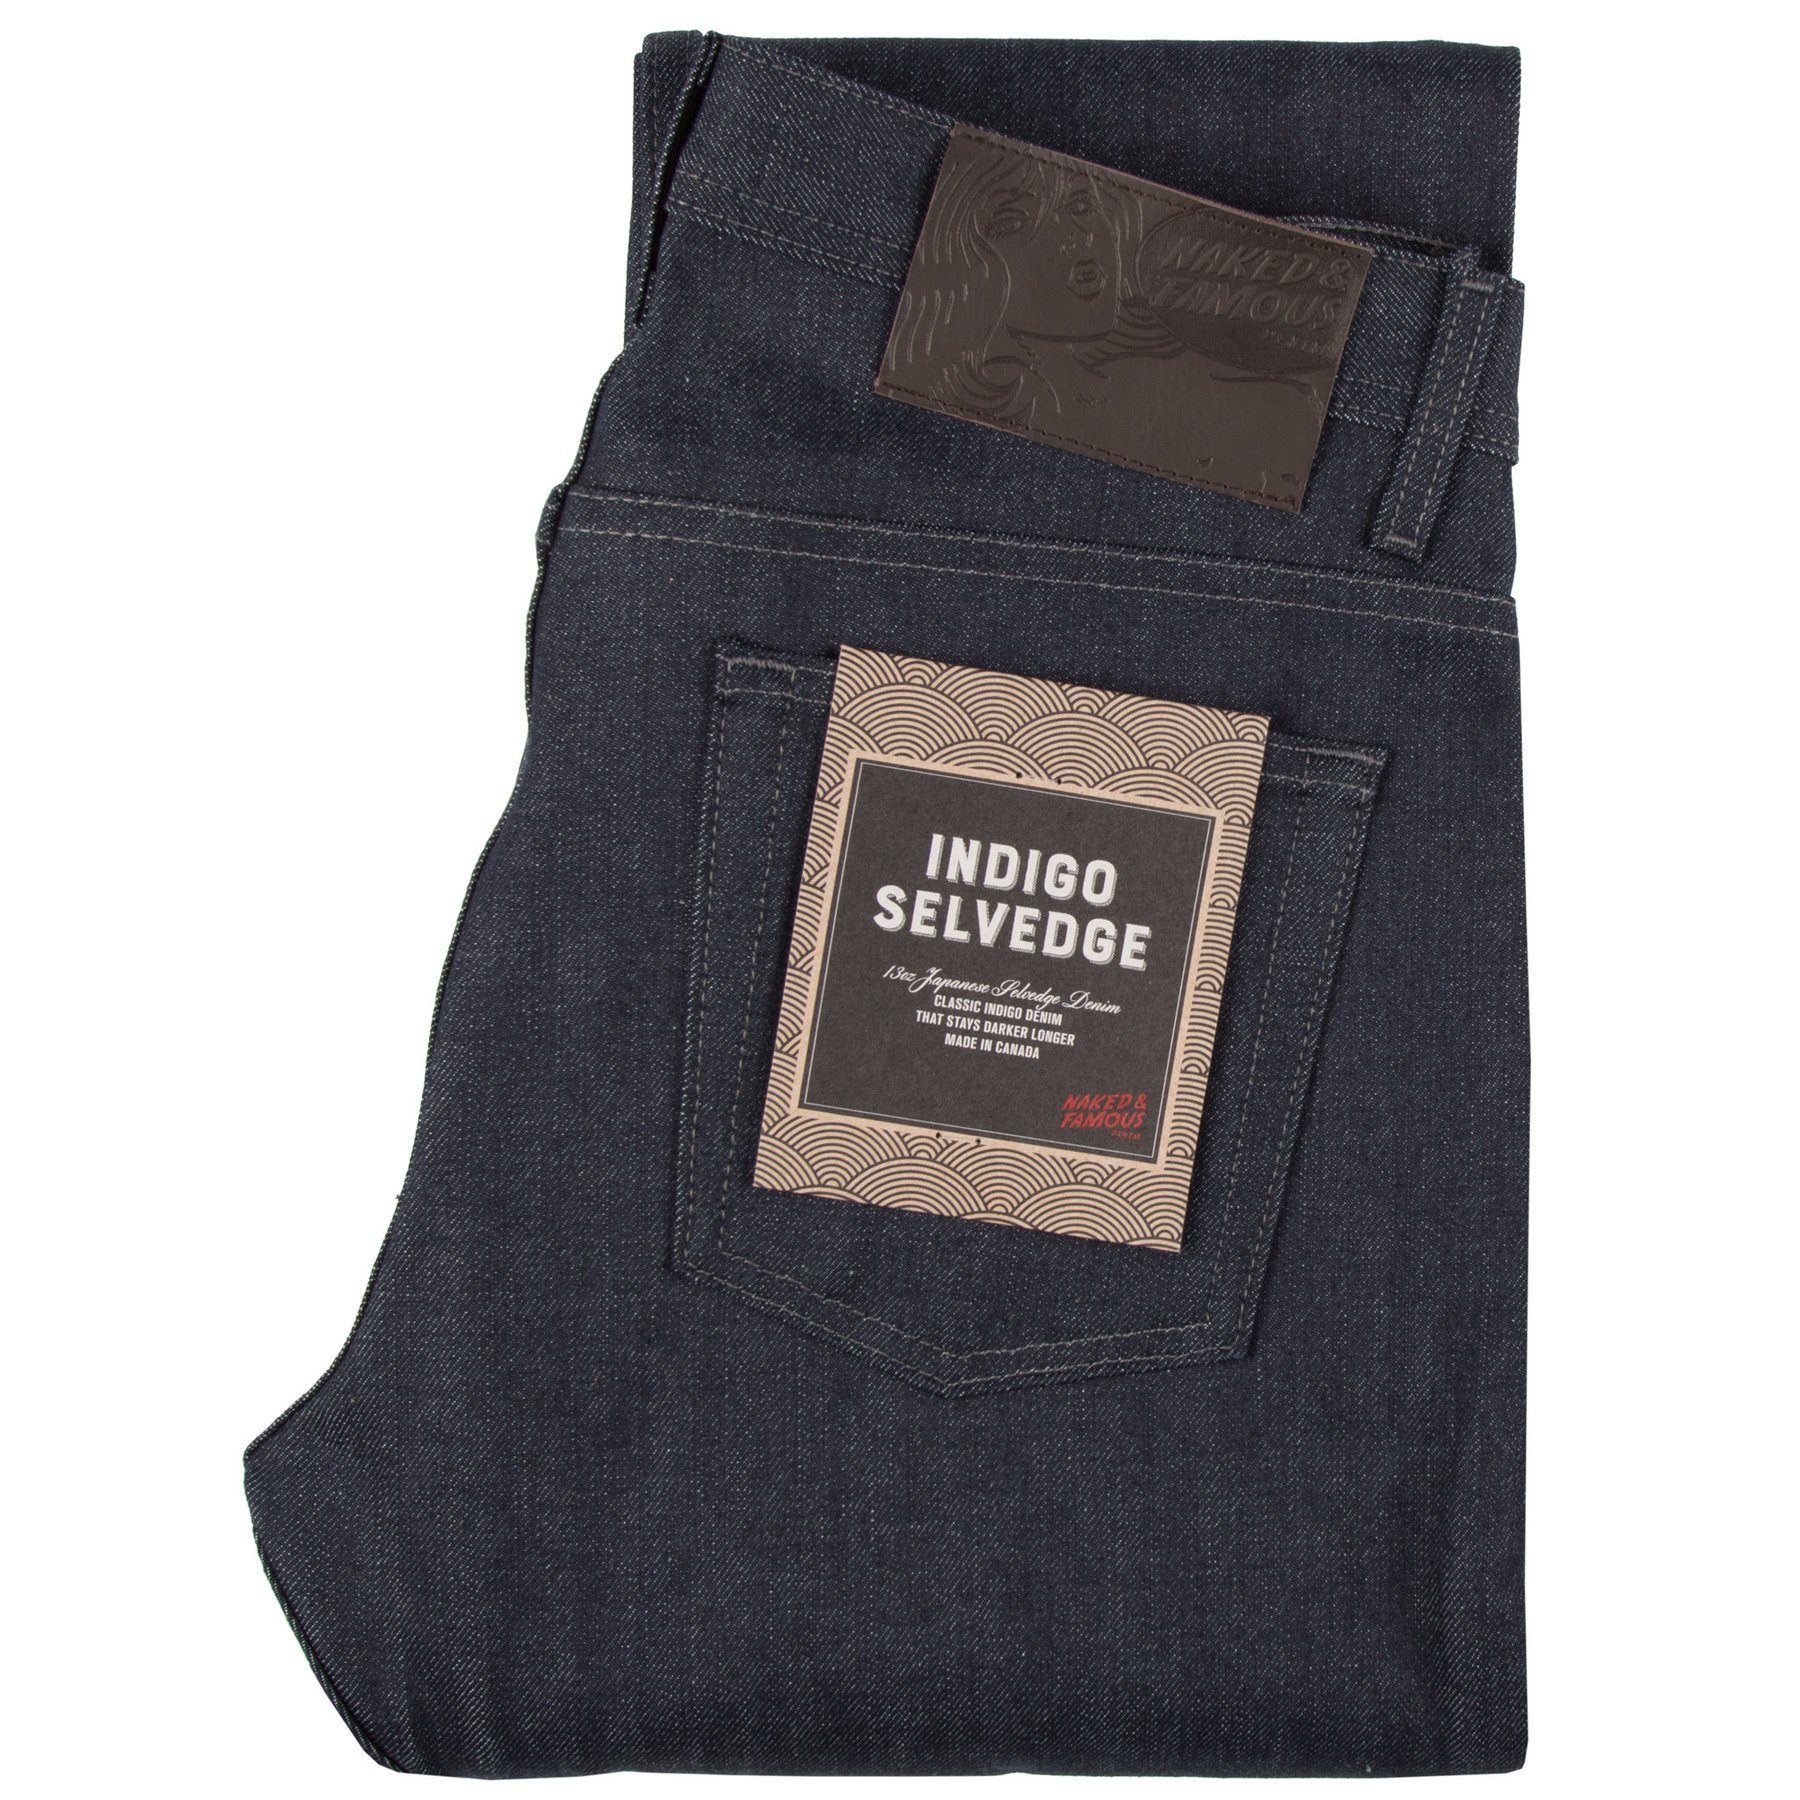  Indigo Selvedge Jeans Folded 